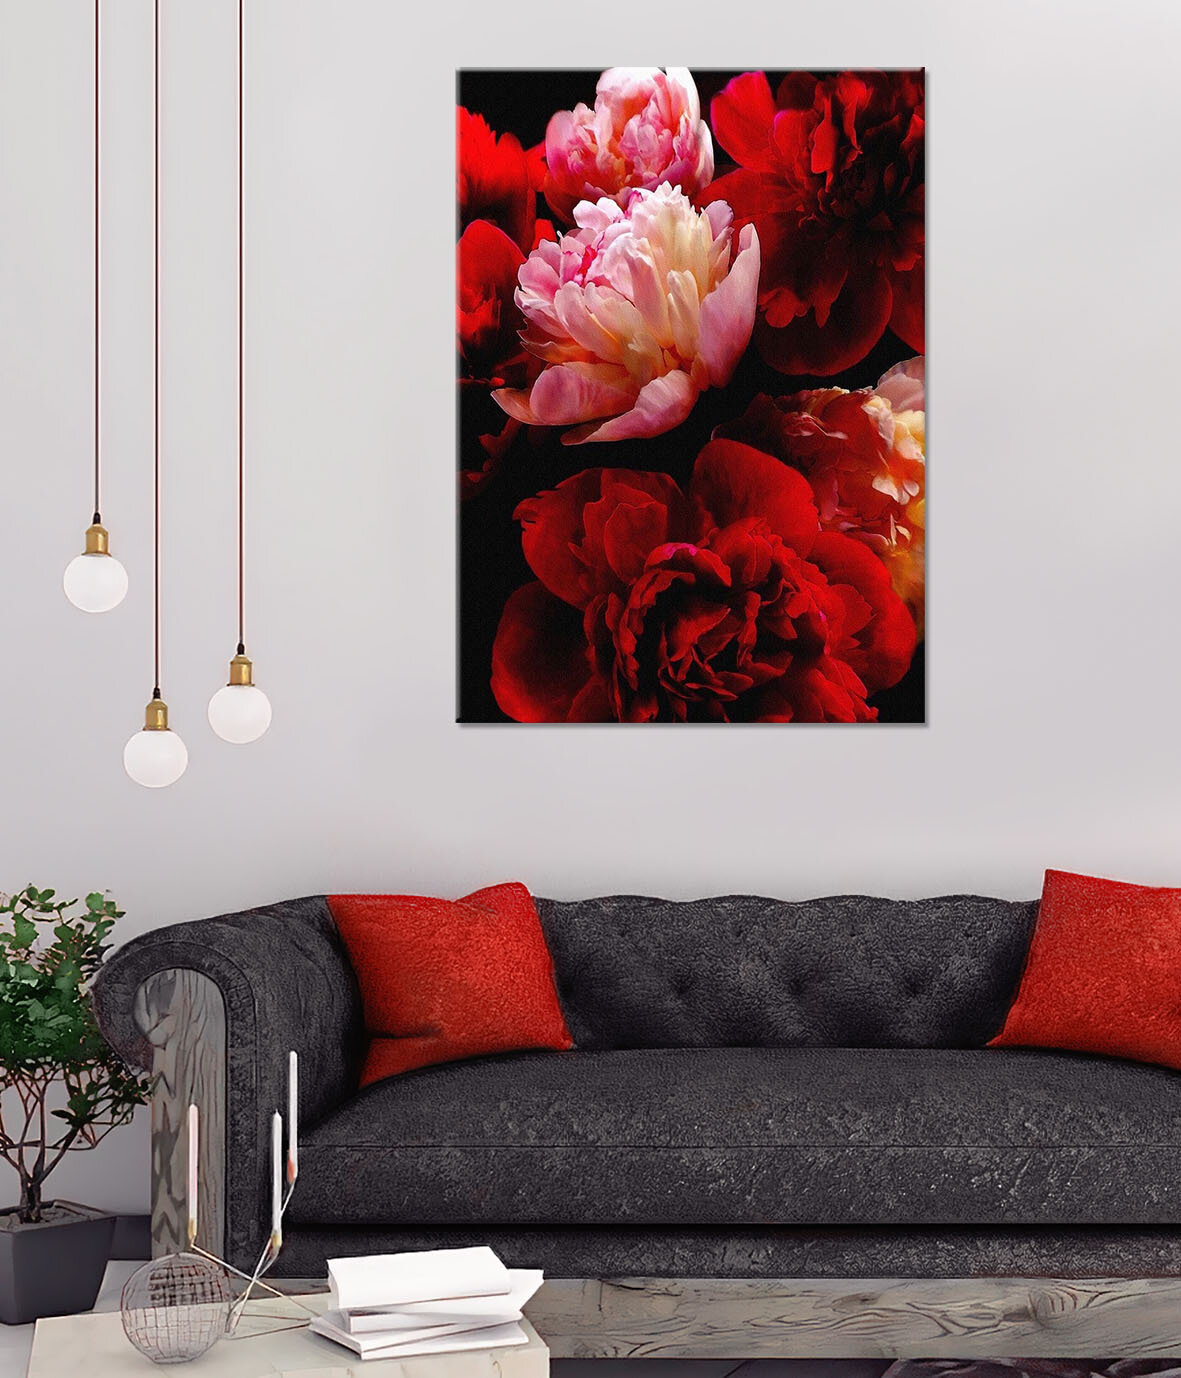 Картина/Картина на холсте/Картина на холсте для интерьера/Картина на стену/Картина в подарок для дома/ Цветы: Пионы (17) - Flowers: Peonies (17) 20х30